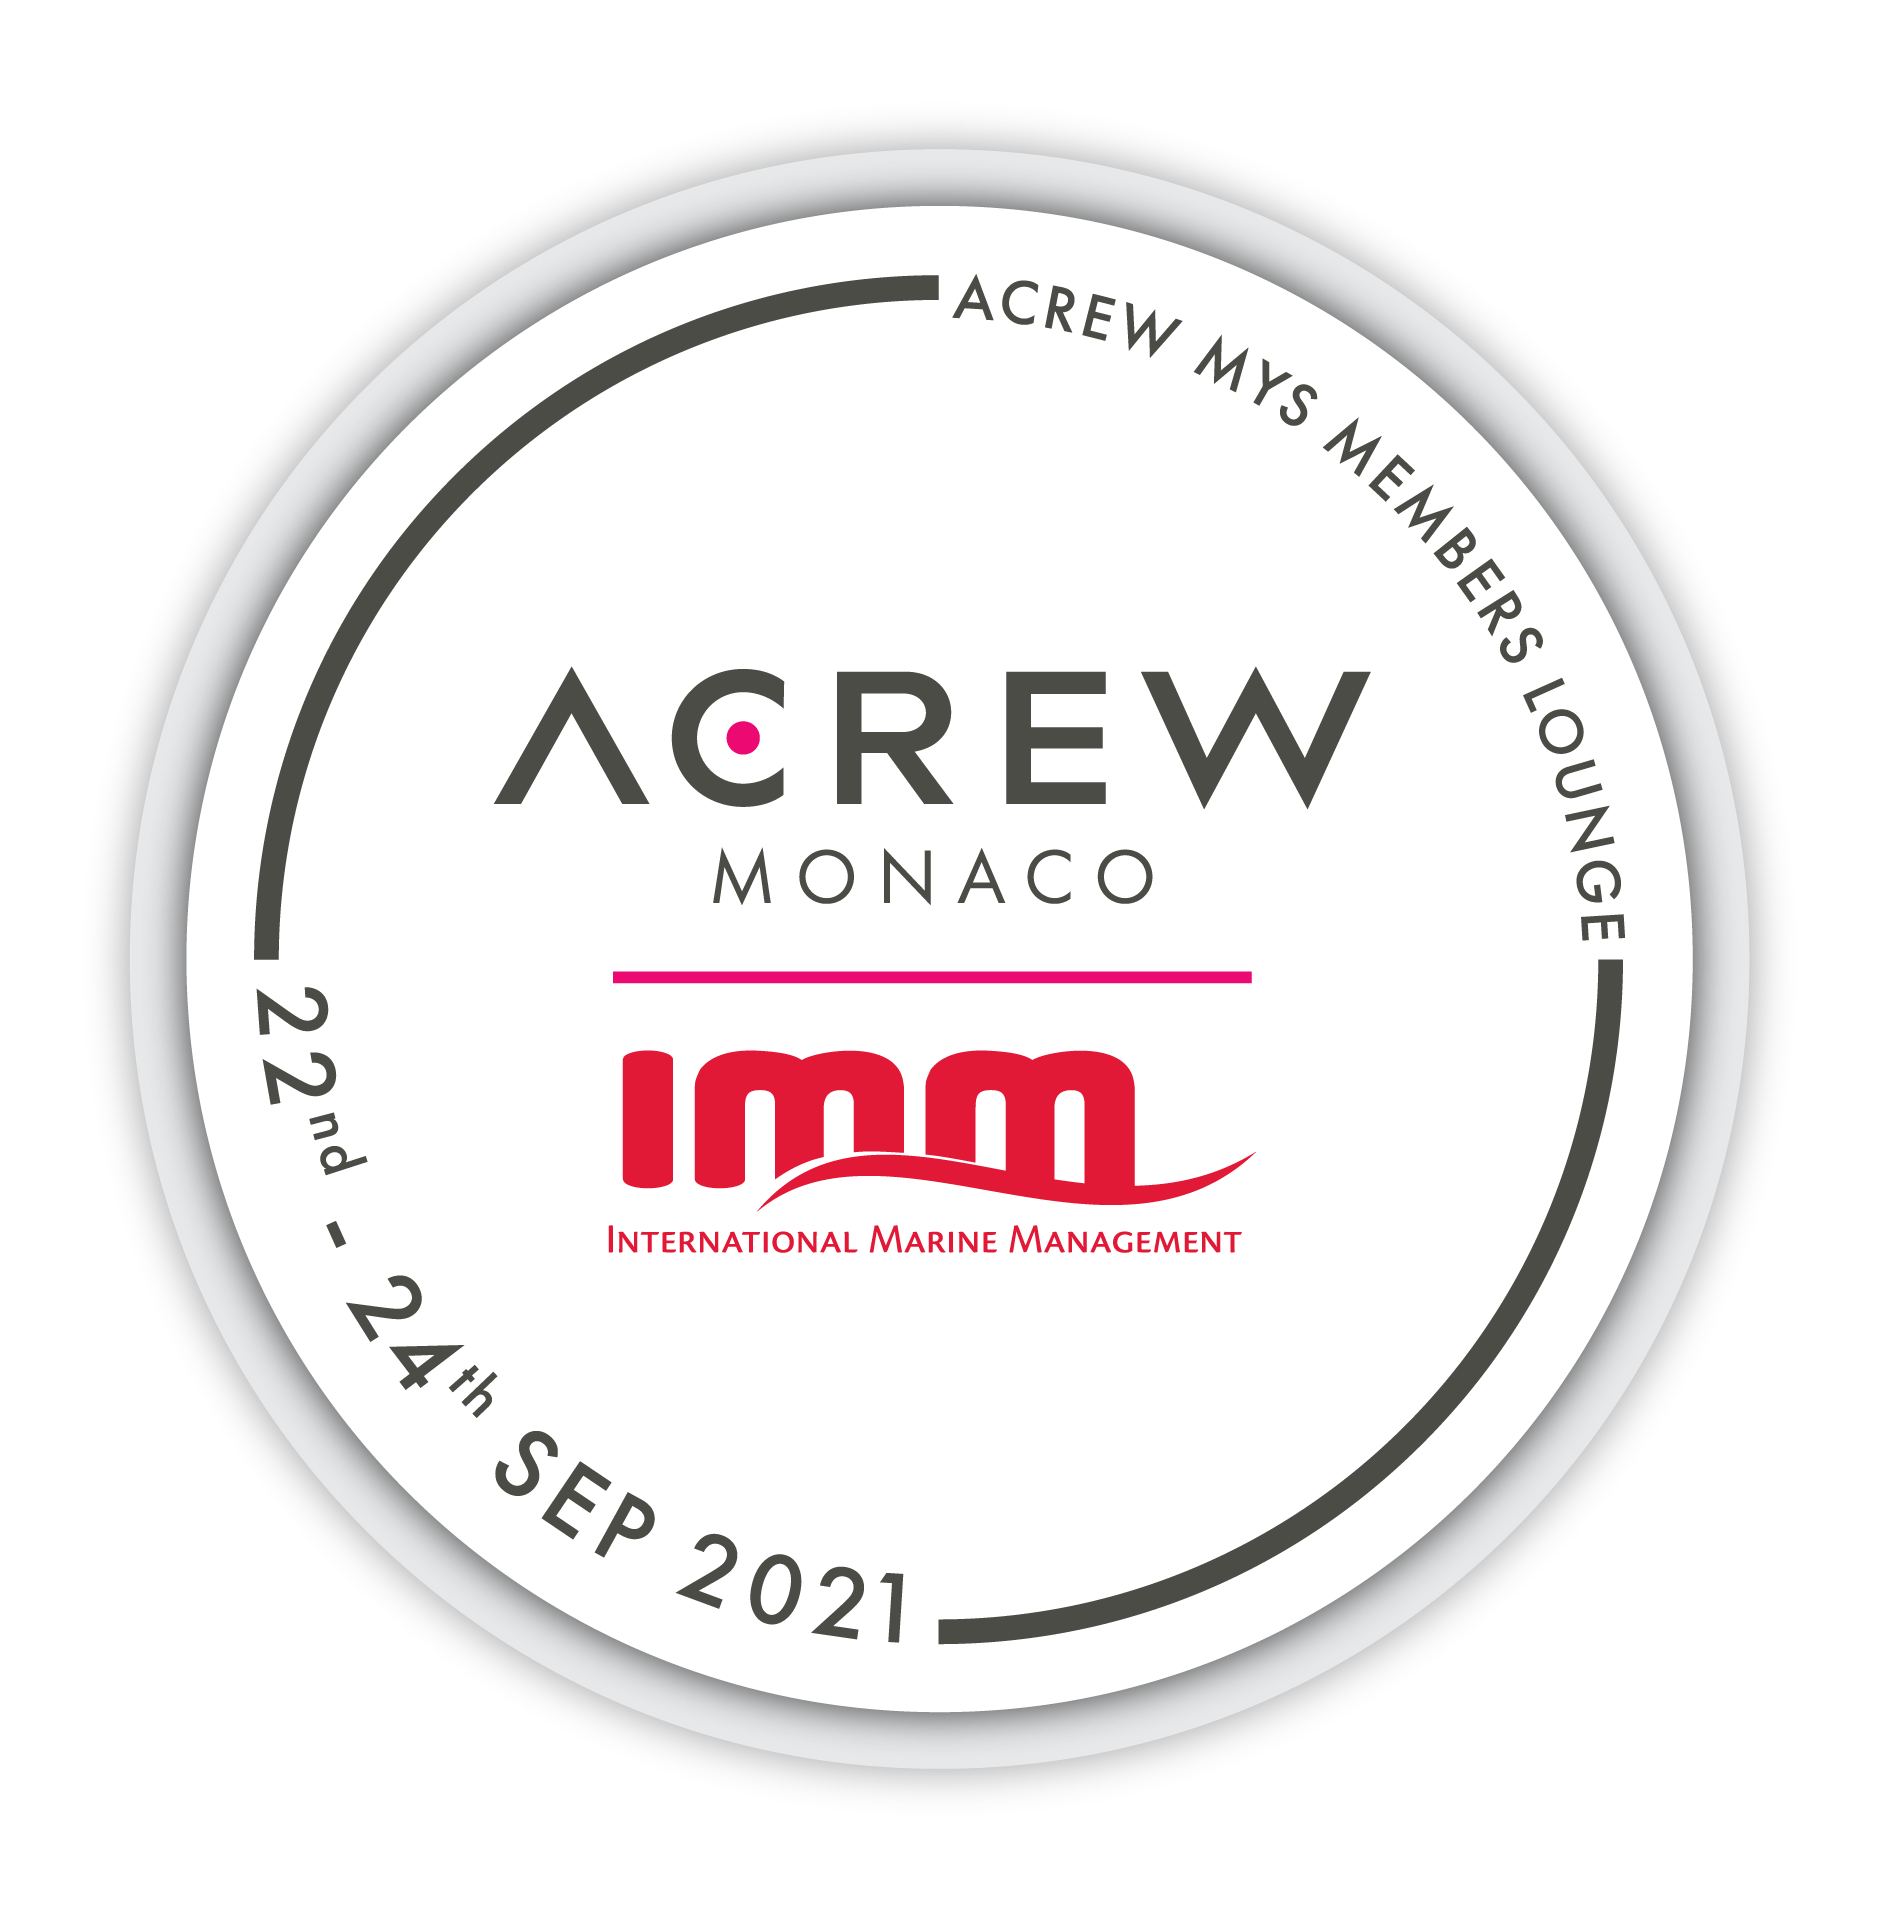 Acrew logo for Monaco Yacht Show 2021